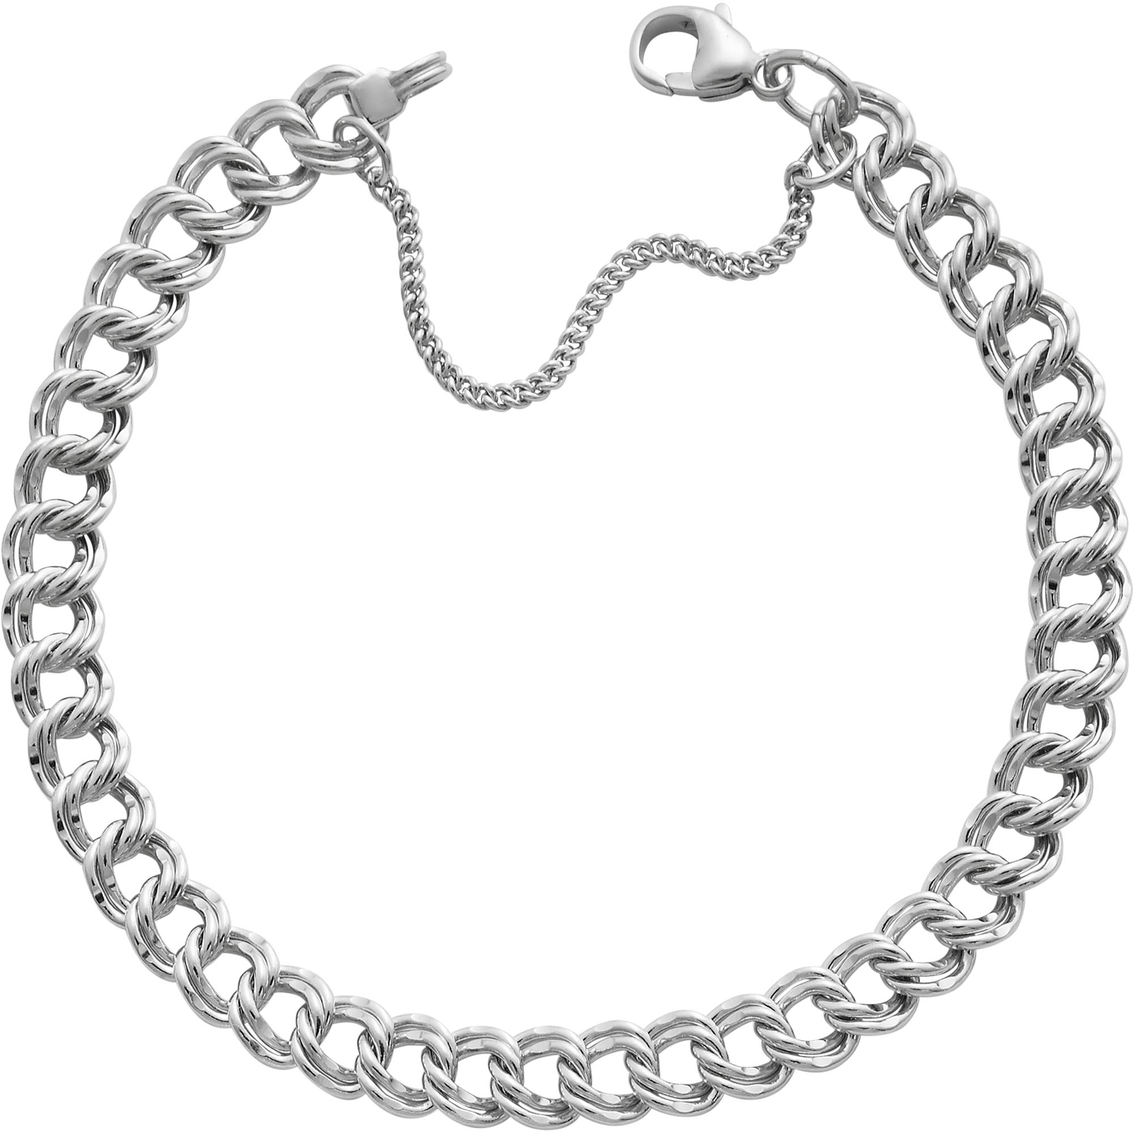 Medium Double Curb Charm Bracelet | Silver Bracelets | Jewelry ...